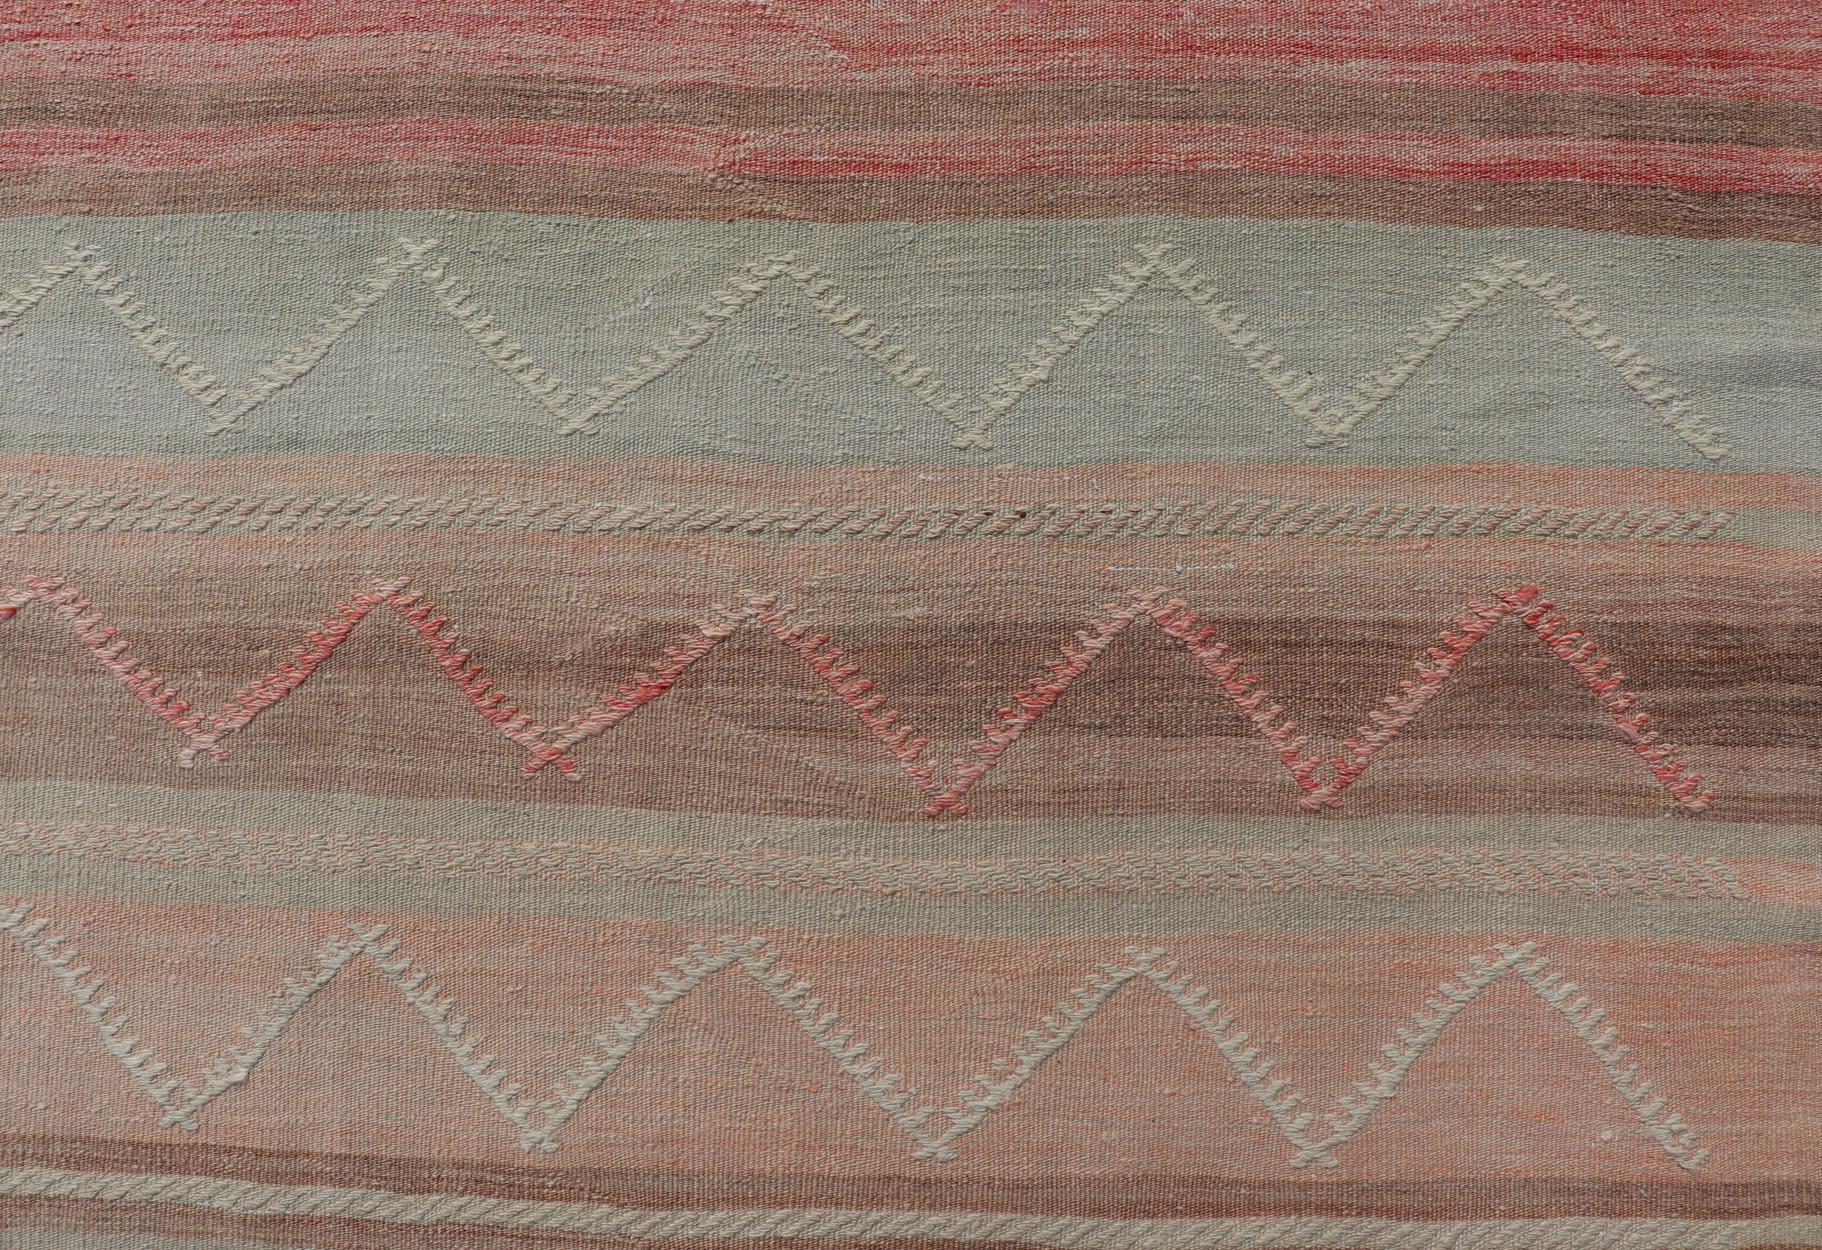 Multicolored Vintage Gallery Turkish Large Kilim Rug with Stripe Design For Sale 3